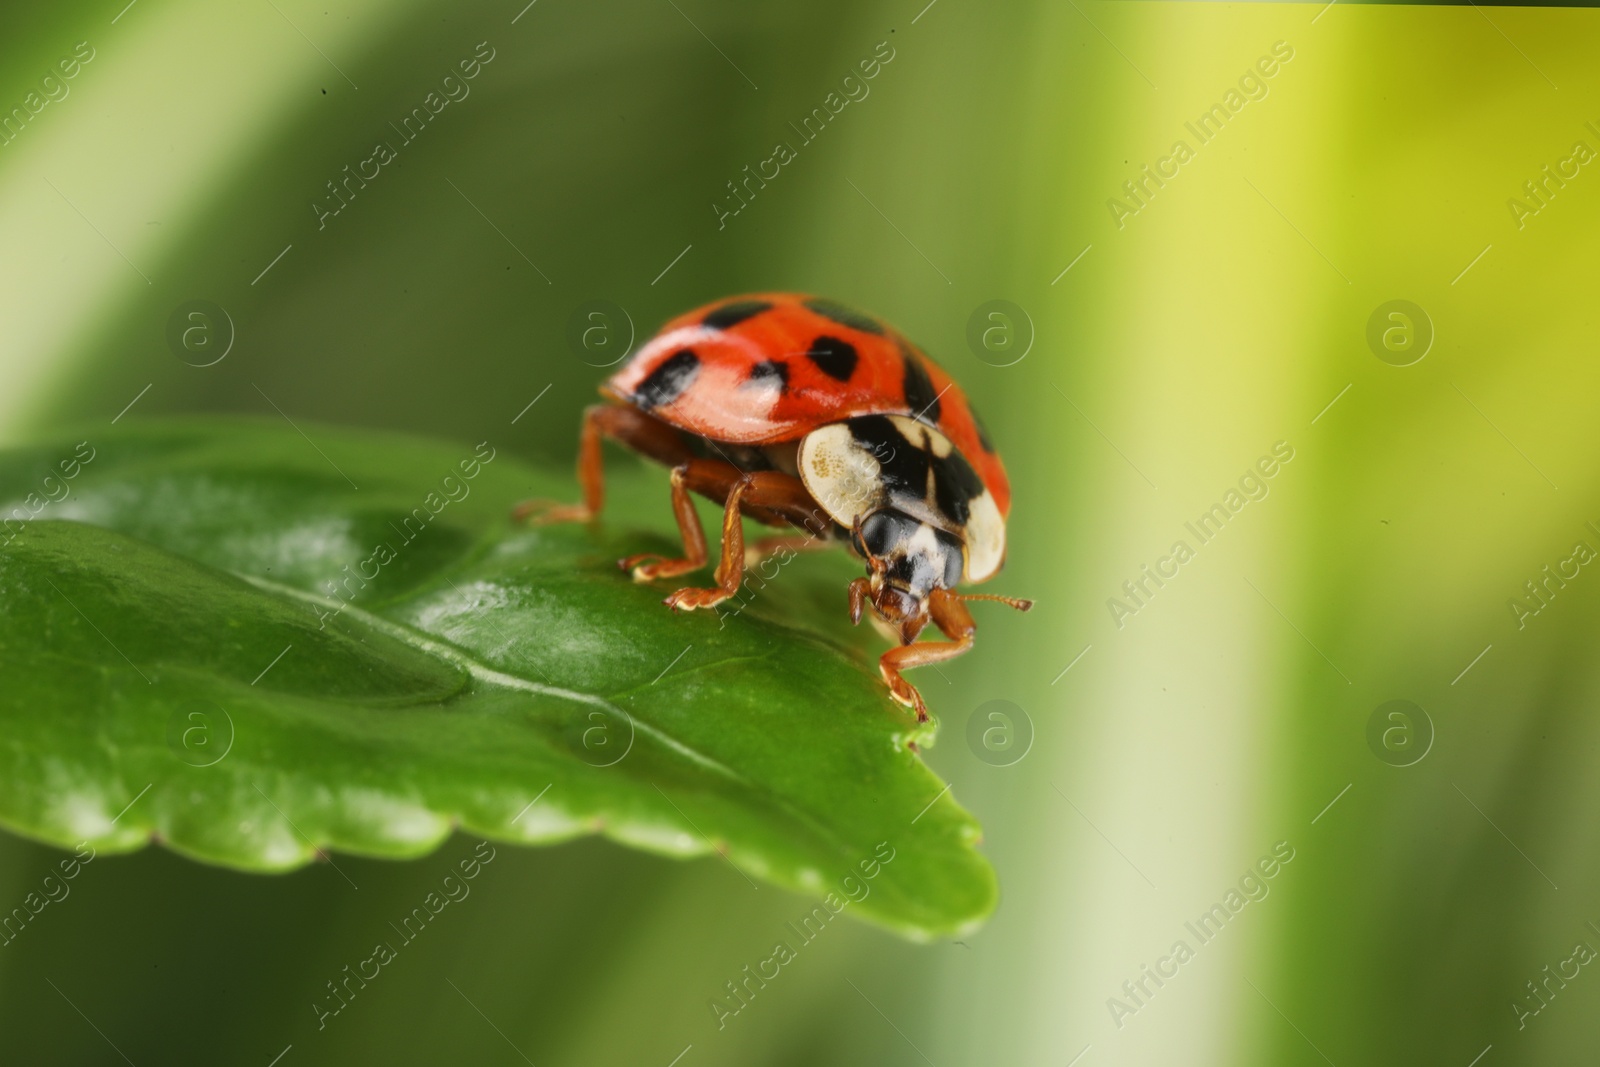 Photo of Ladybug on green leaf against blurred background, macro view